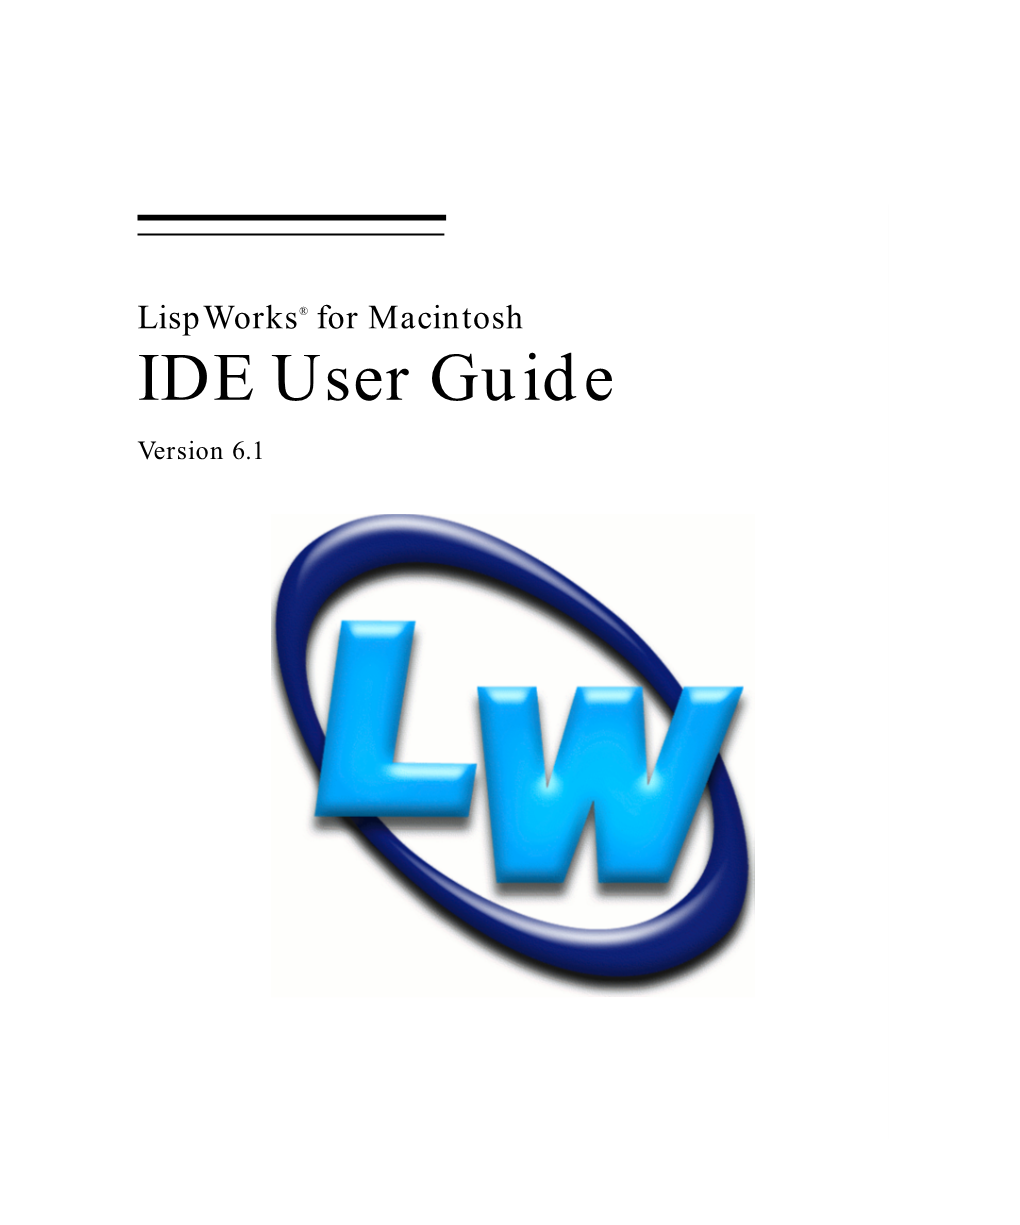 Lispworks for Macintosh IDE User Guide